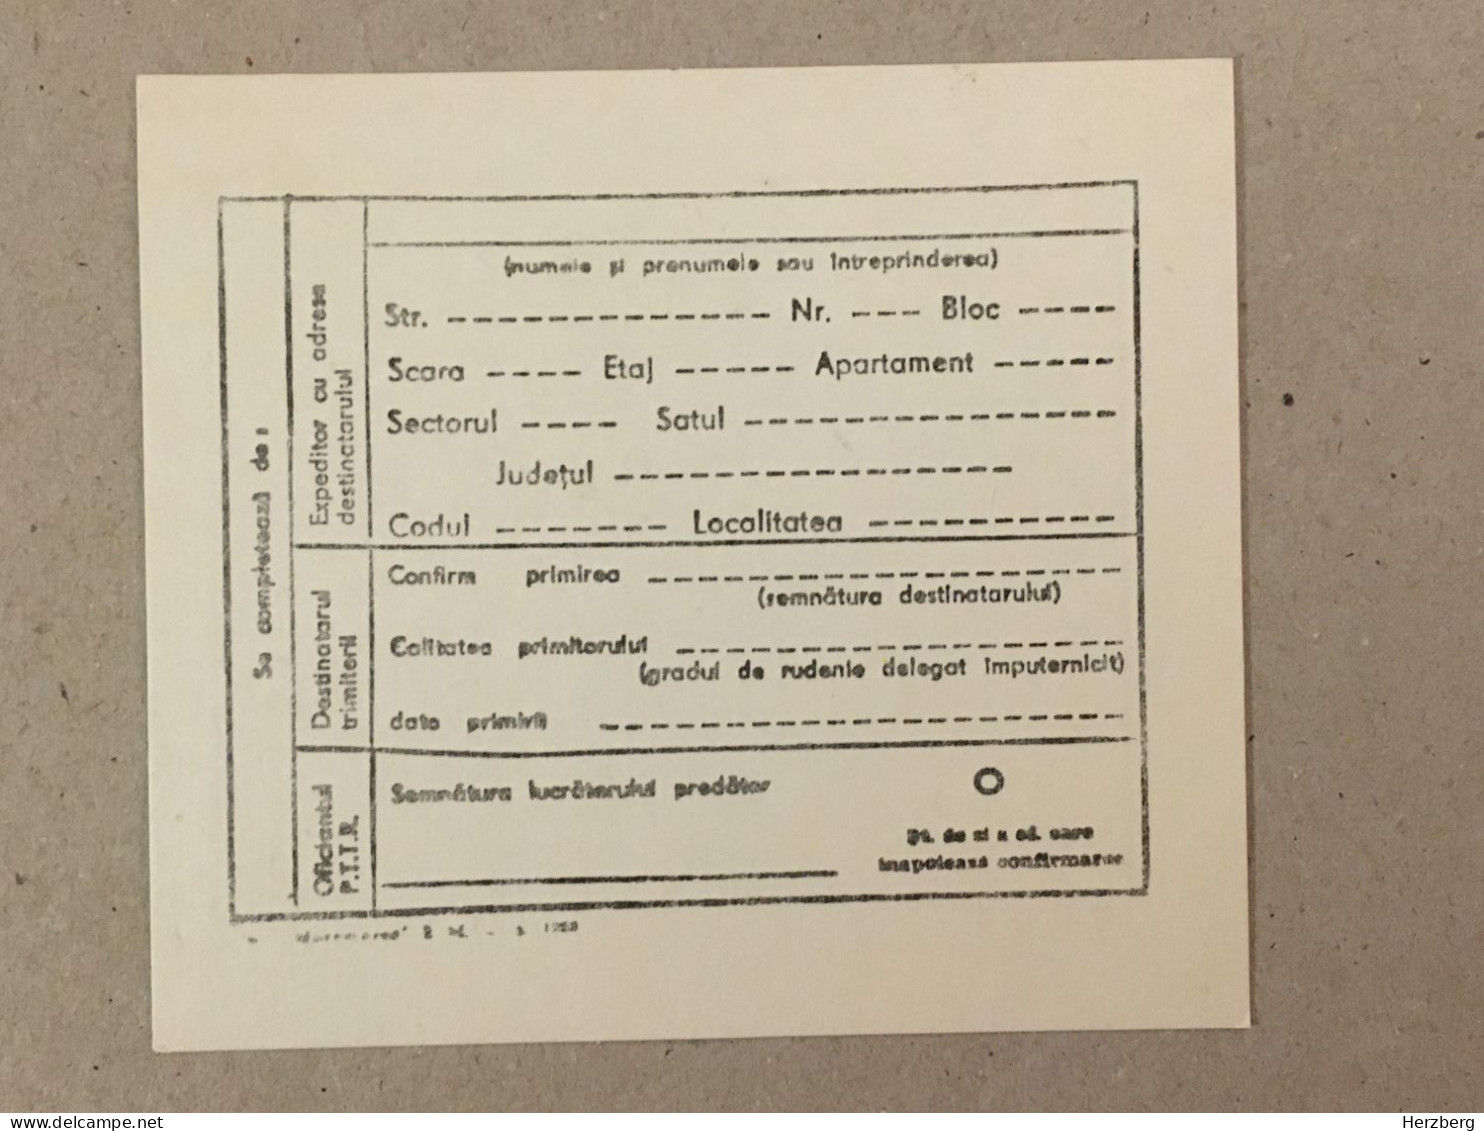 Romania Rumanien Roumanie - 1981 Confirmare De Primire / Postal Receipt Confirmation - Unused - Lettres & Documents